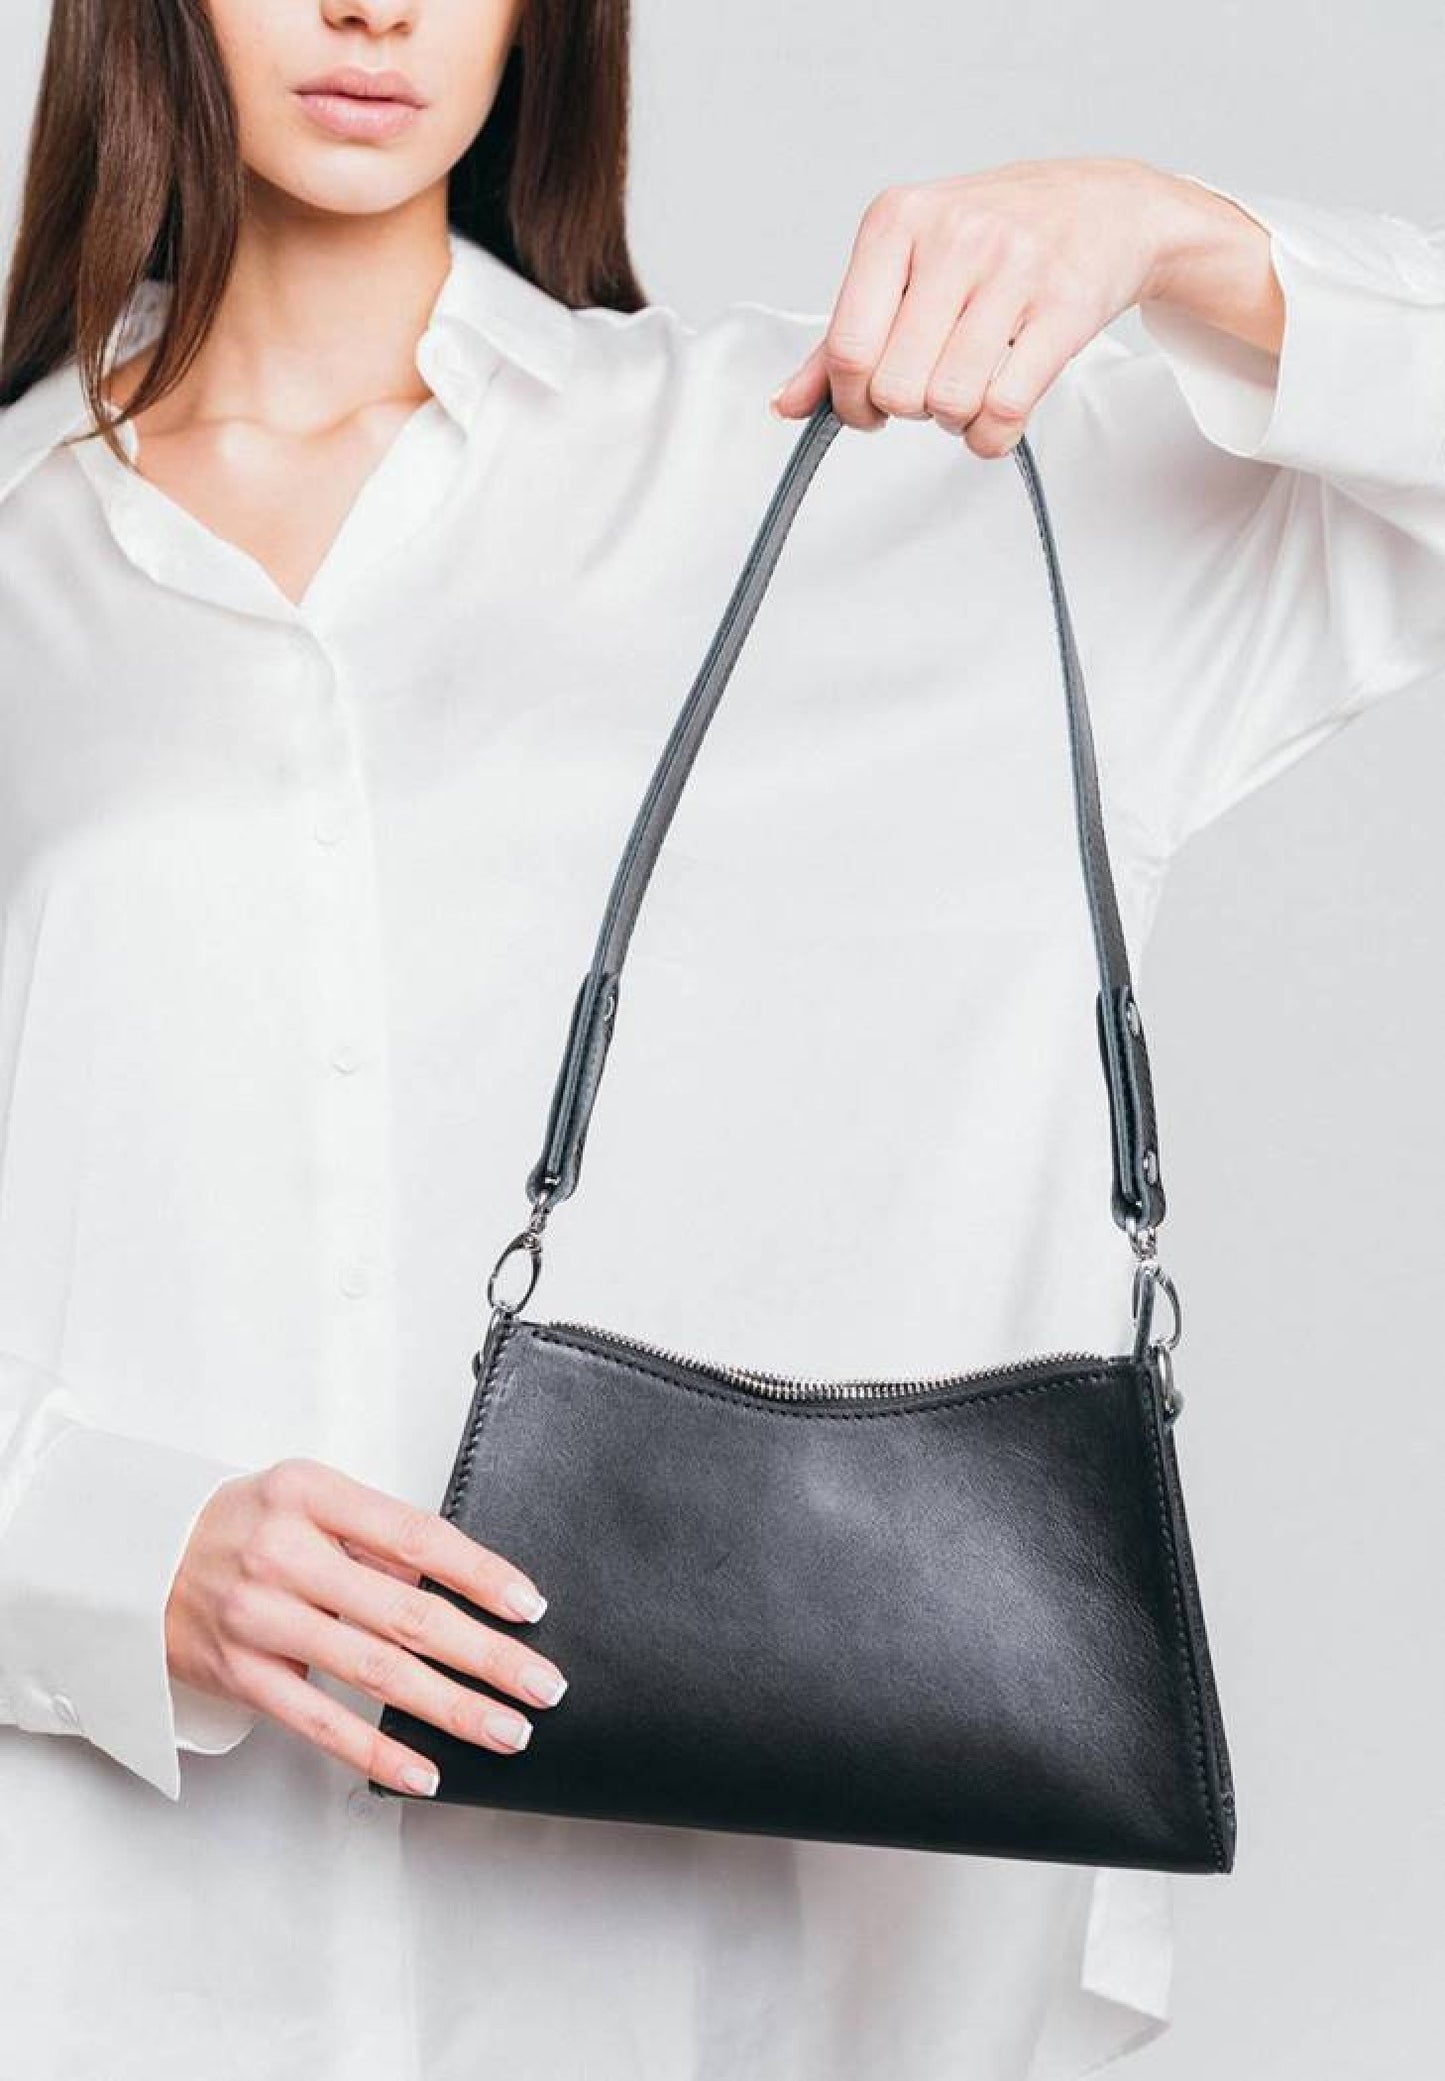 black leather bag for women